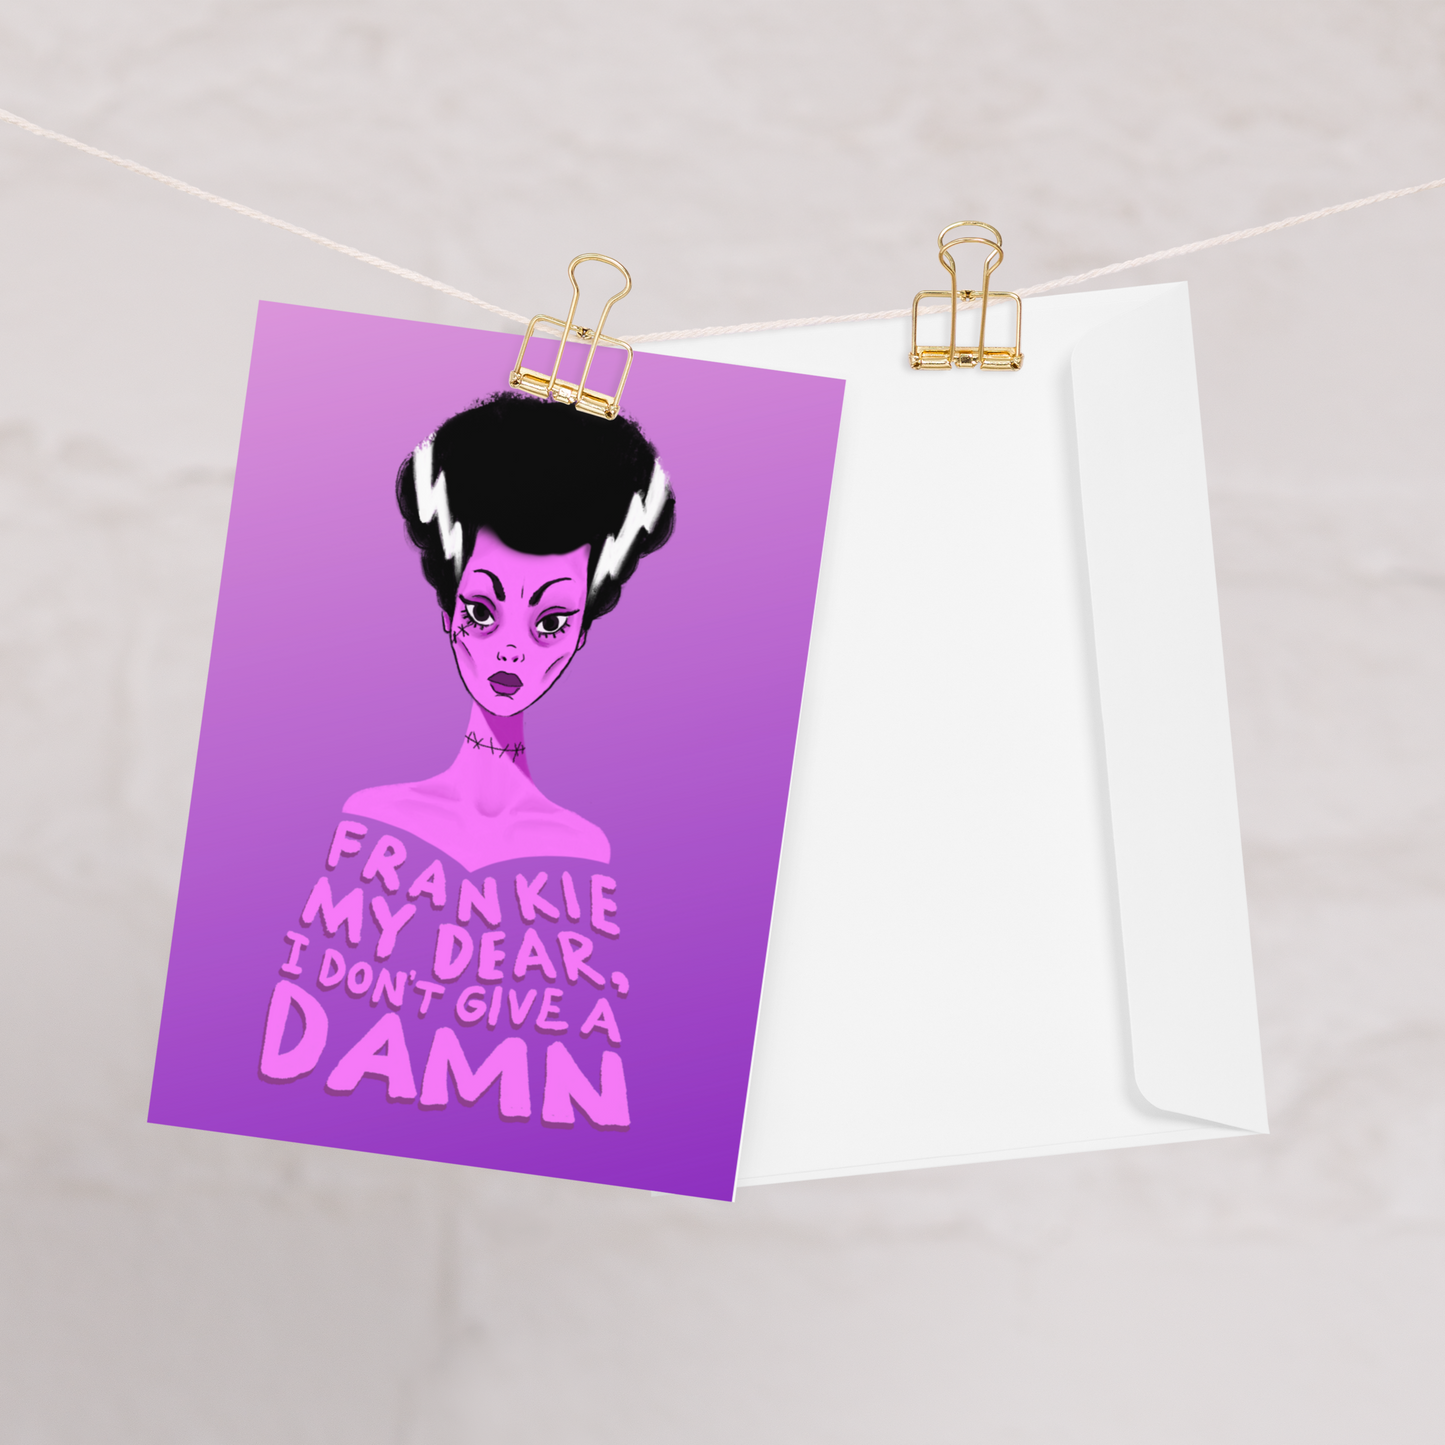 Bride of Frankie Card / Sassy Card / October Bride / Bride of Frankenstein / Funny Birthday Cards